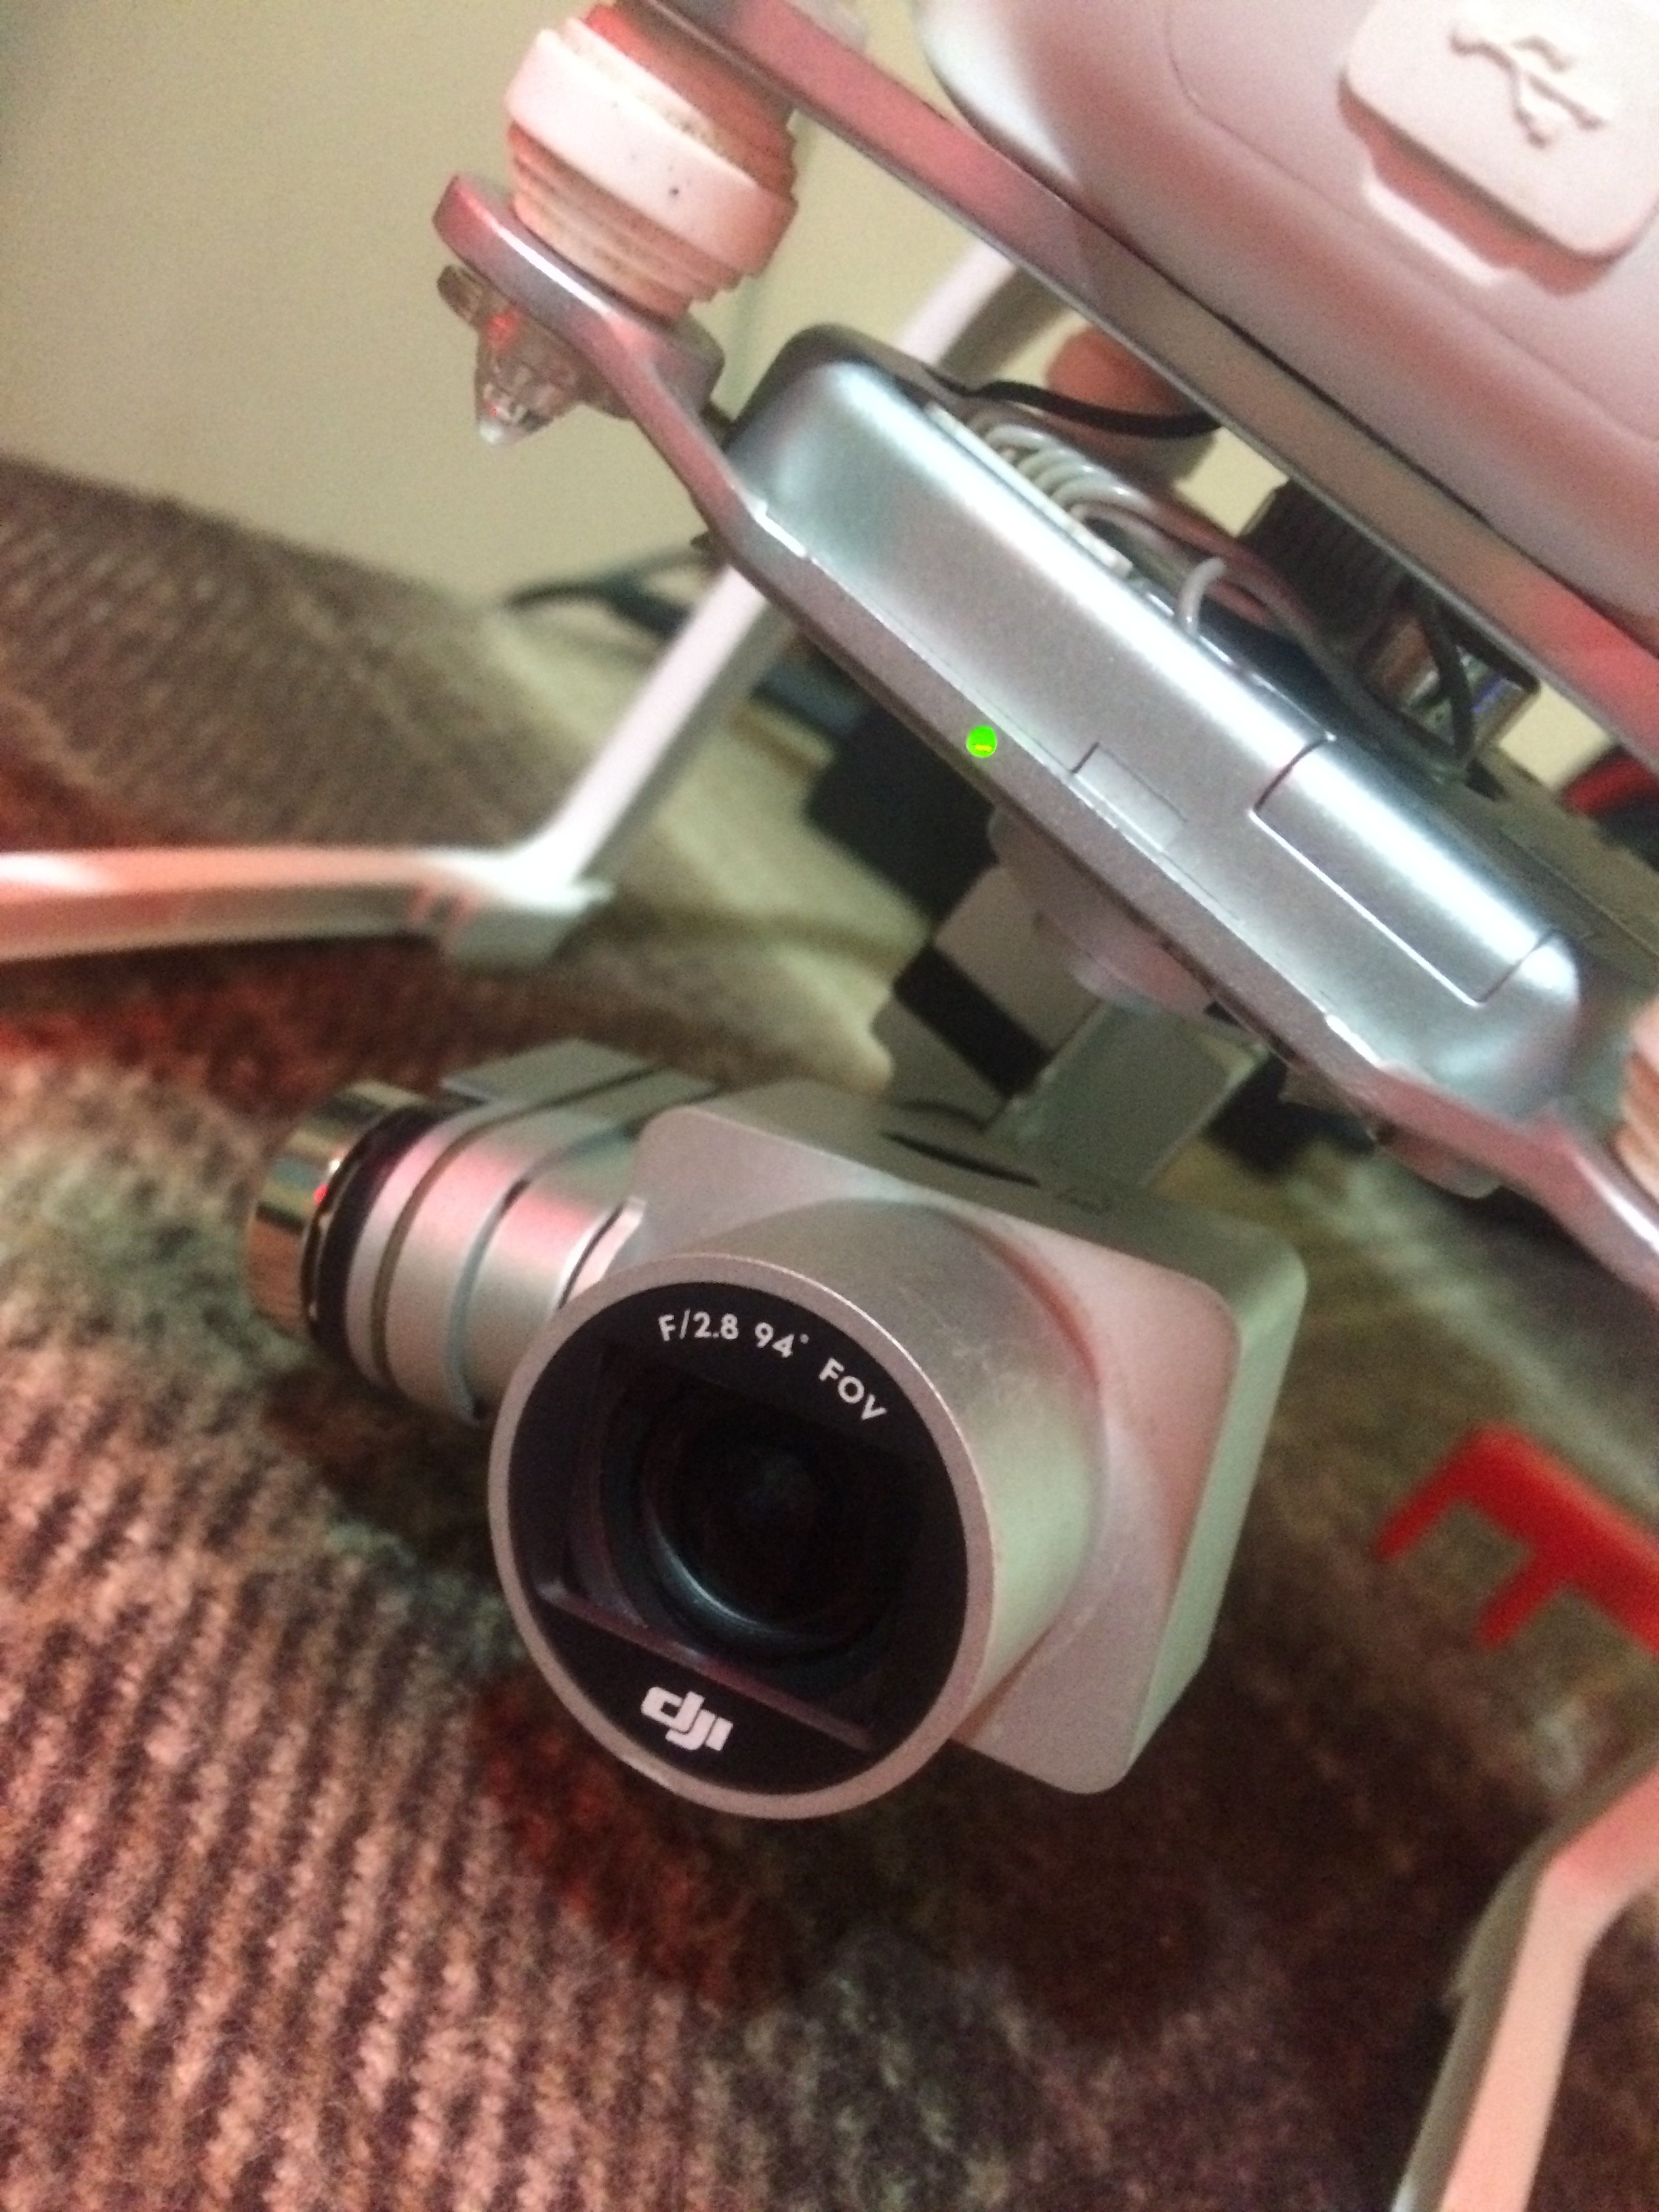 gimbal drone phantom 3 standard